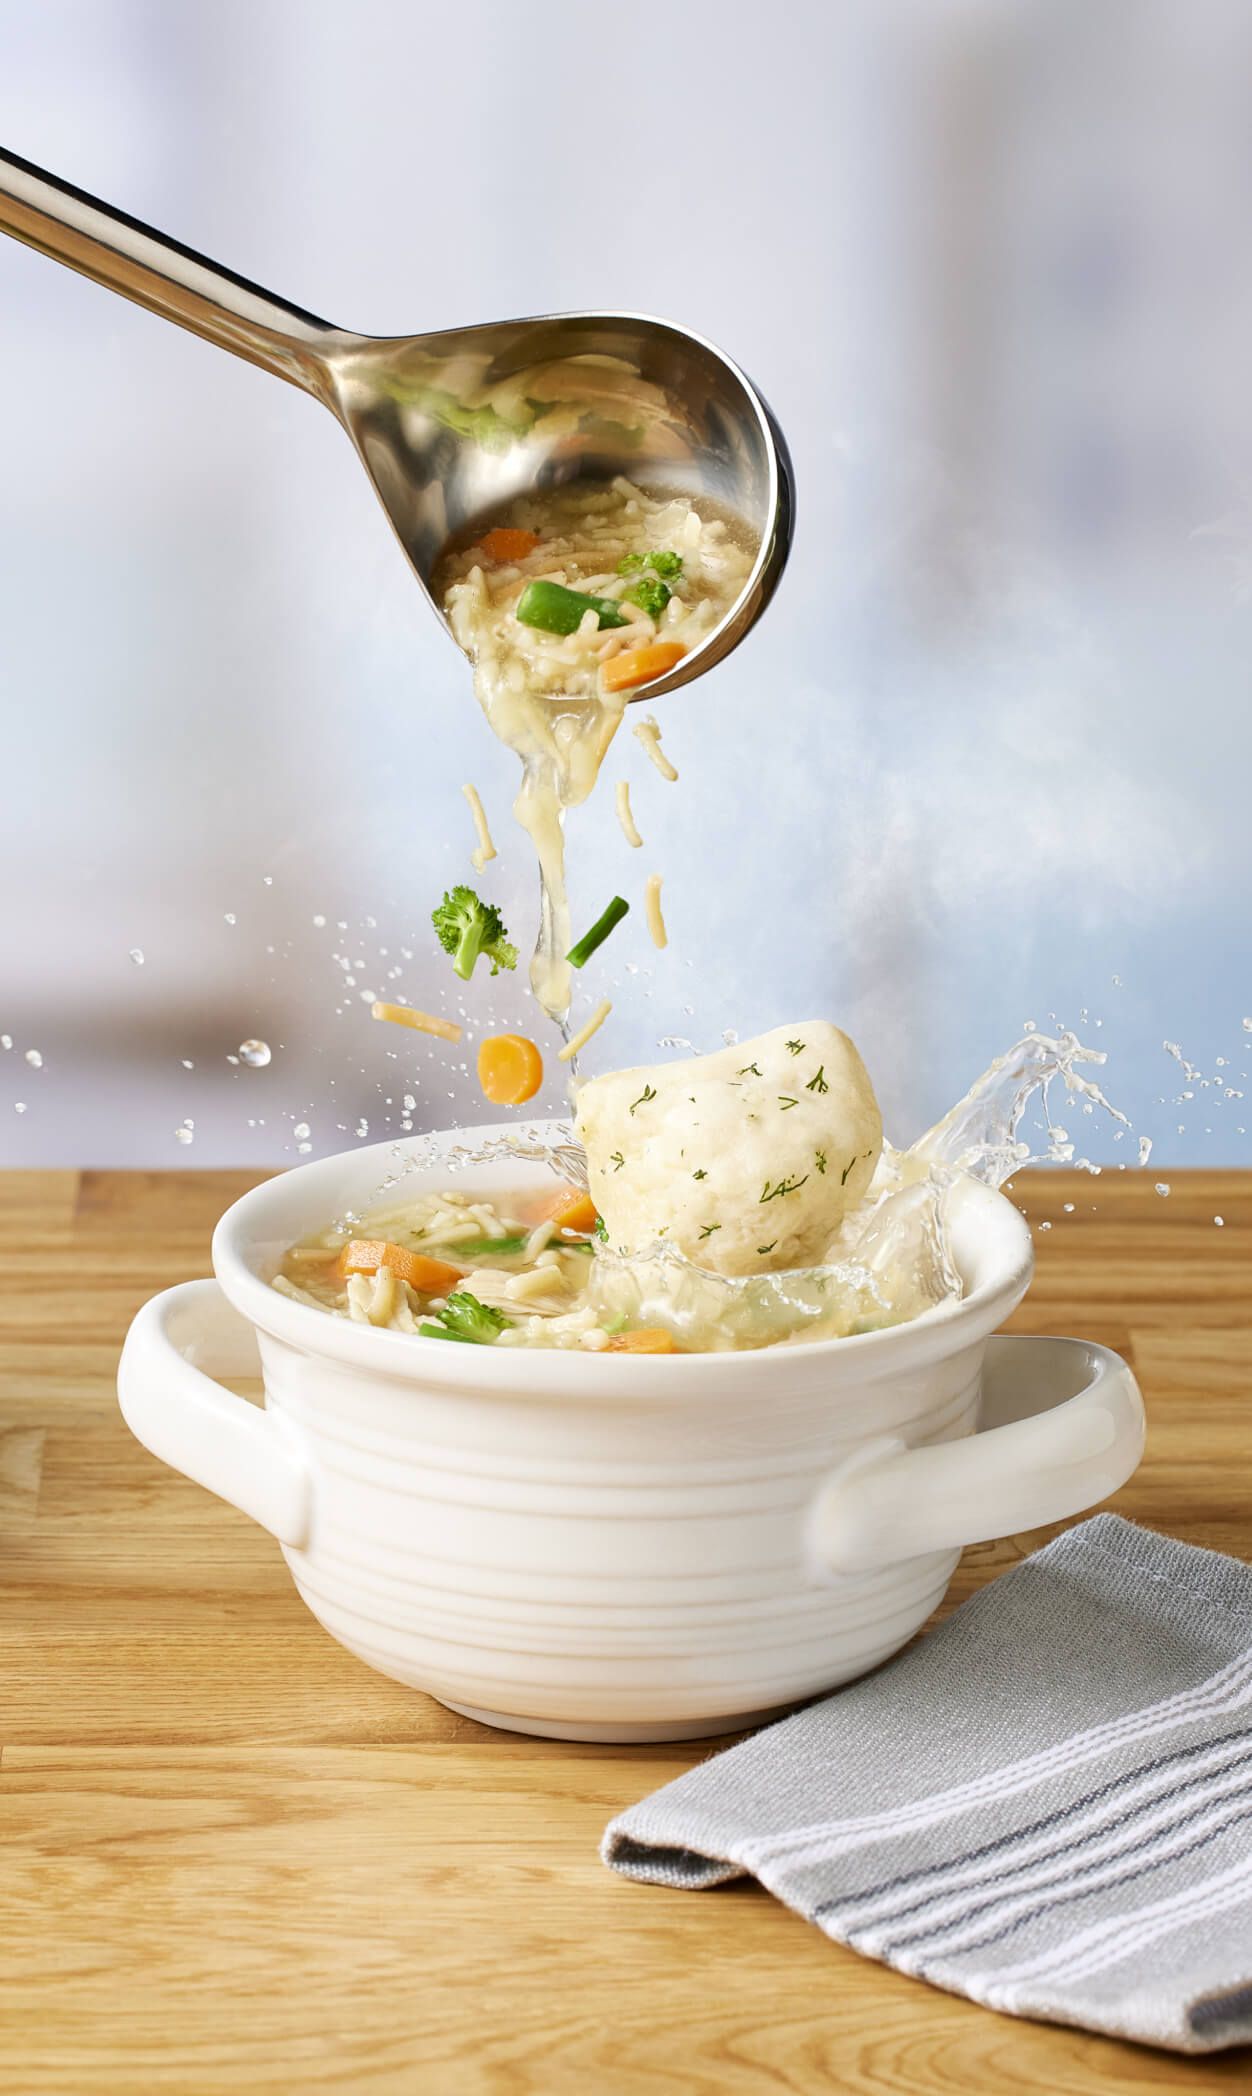 Spoon lifting dumpling from Turkey Veggie Soup bowl.